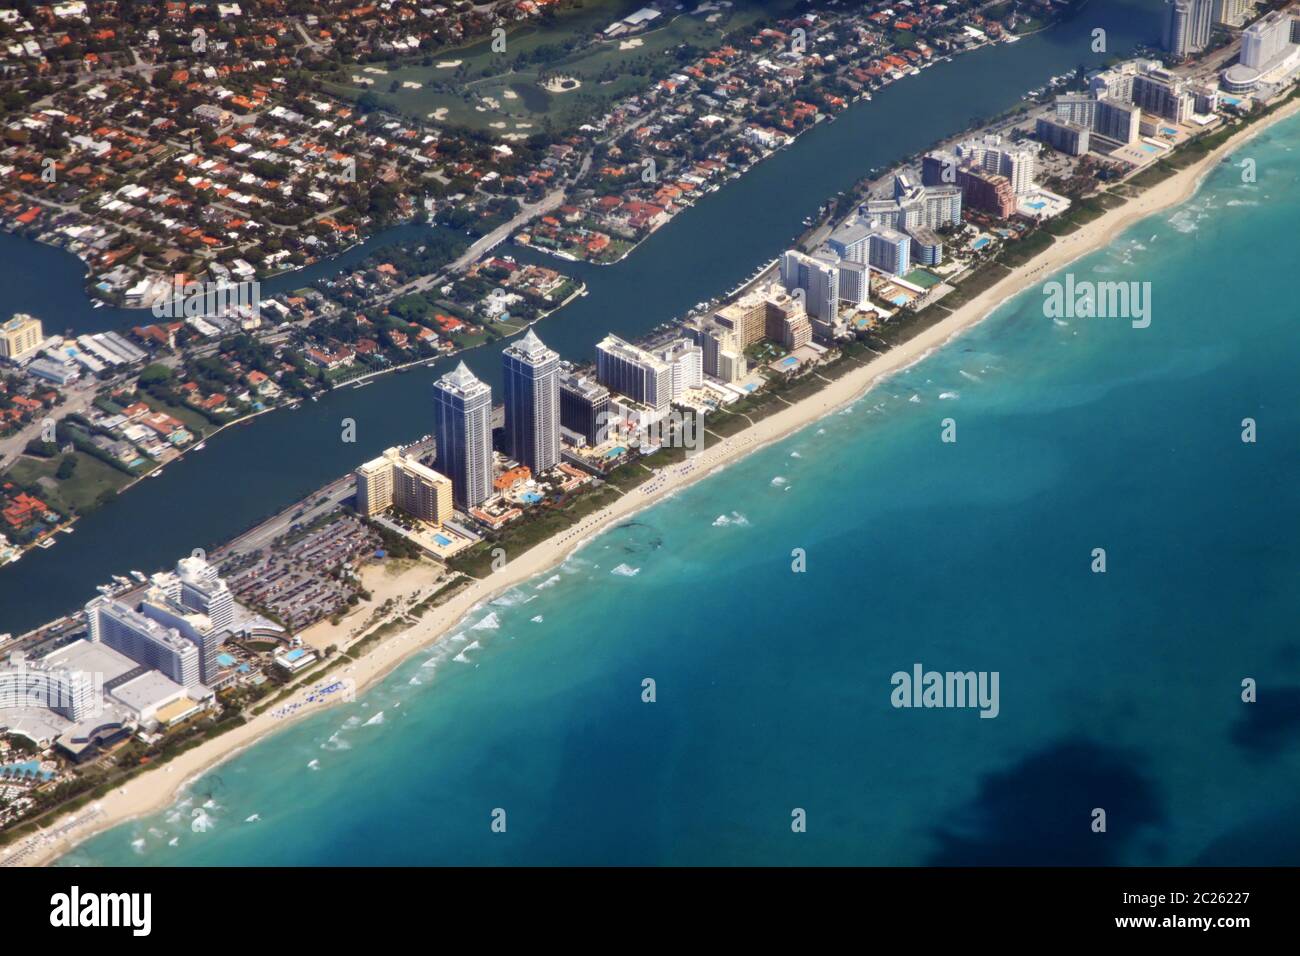 Miami coastline seen from high altitude Stock Photo